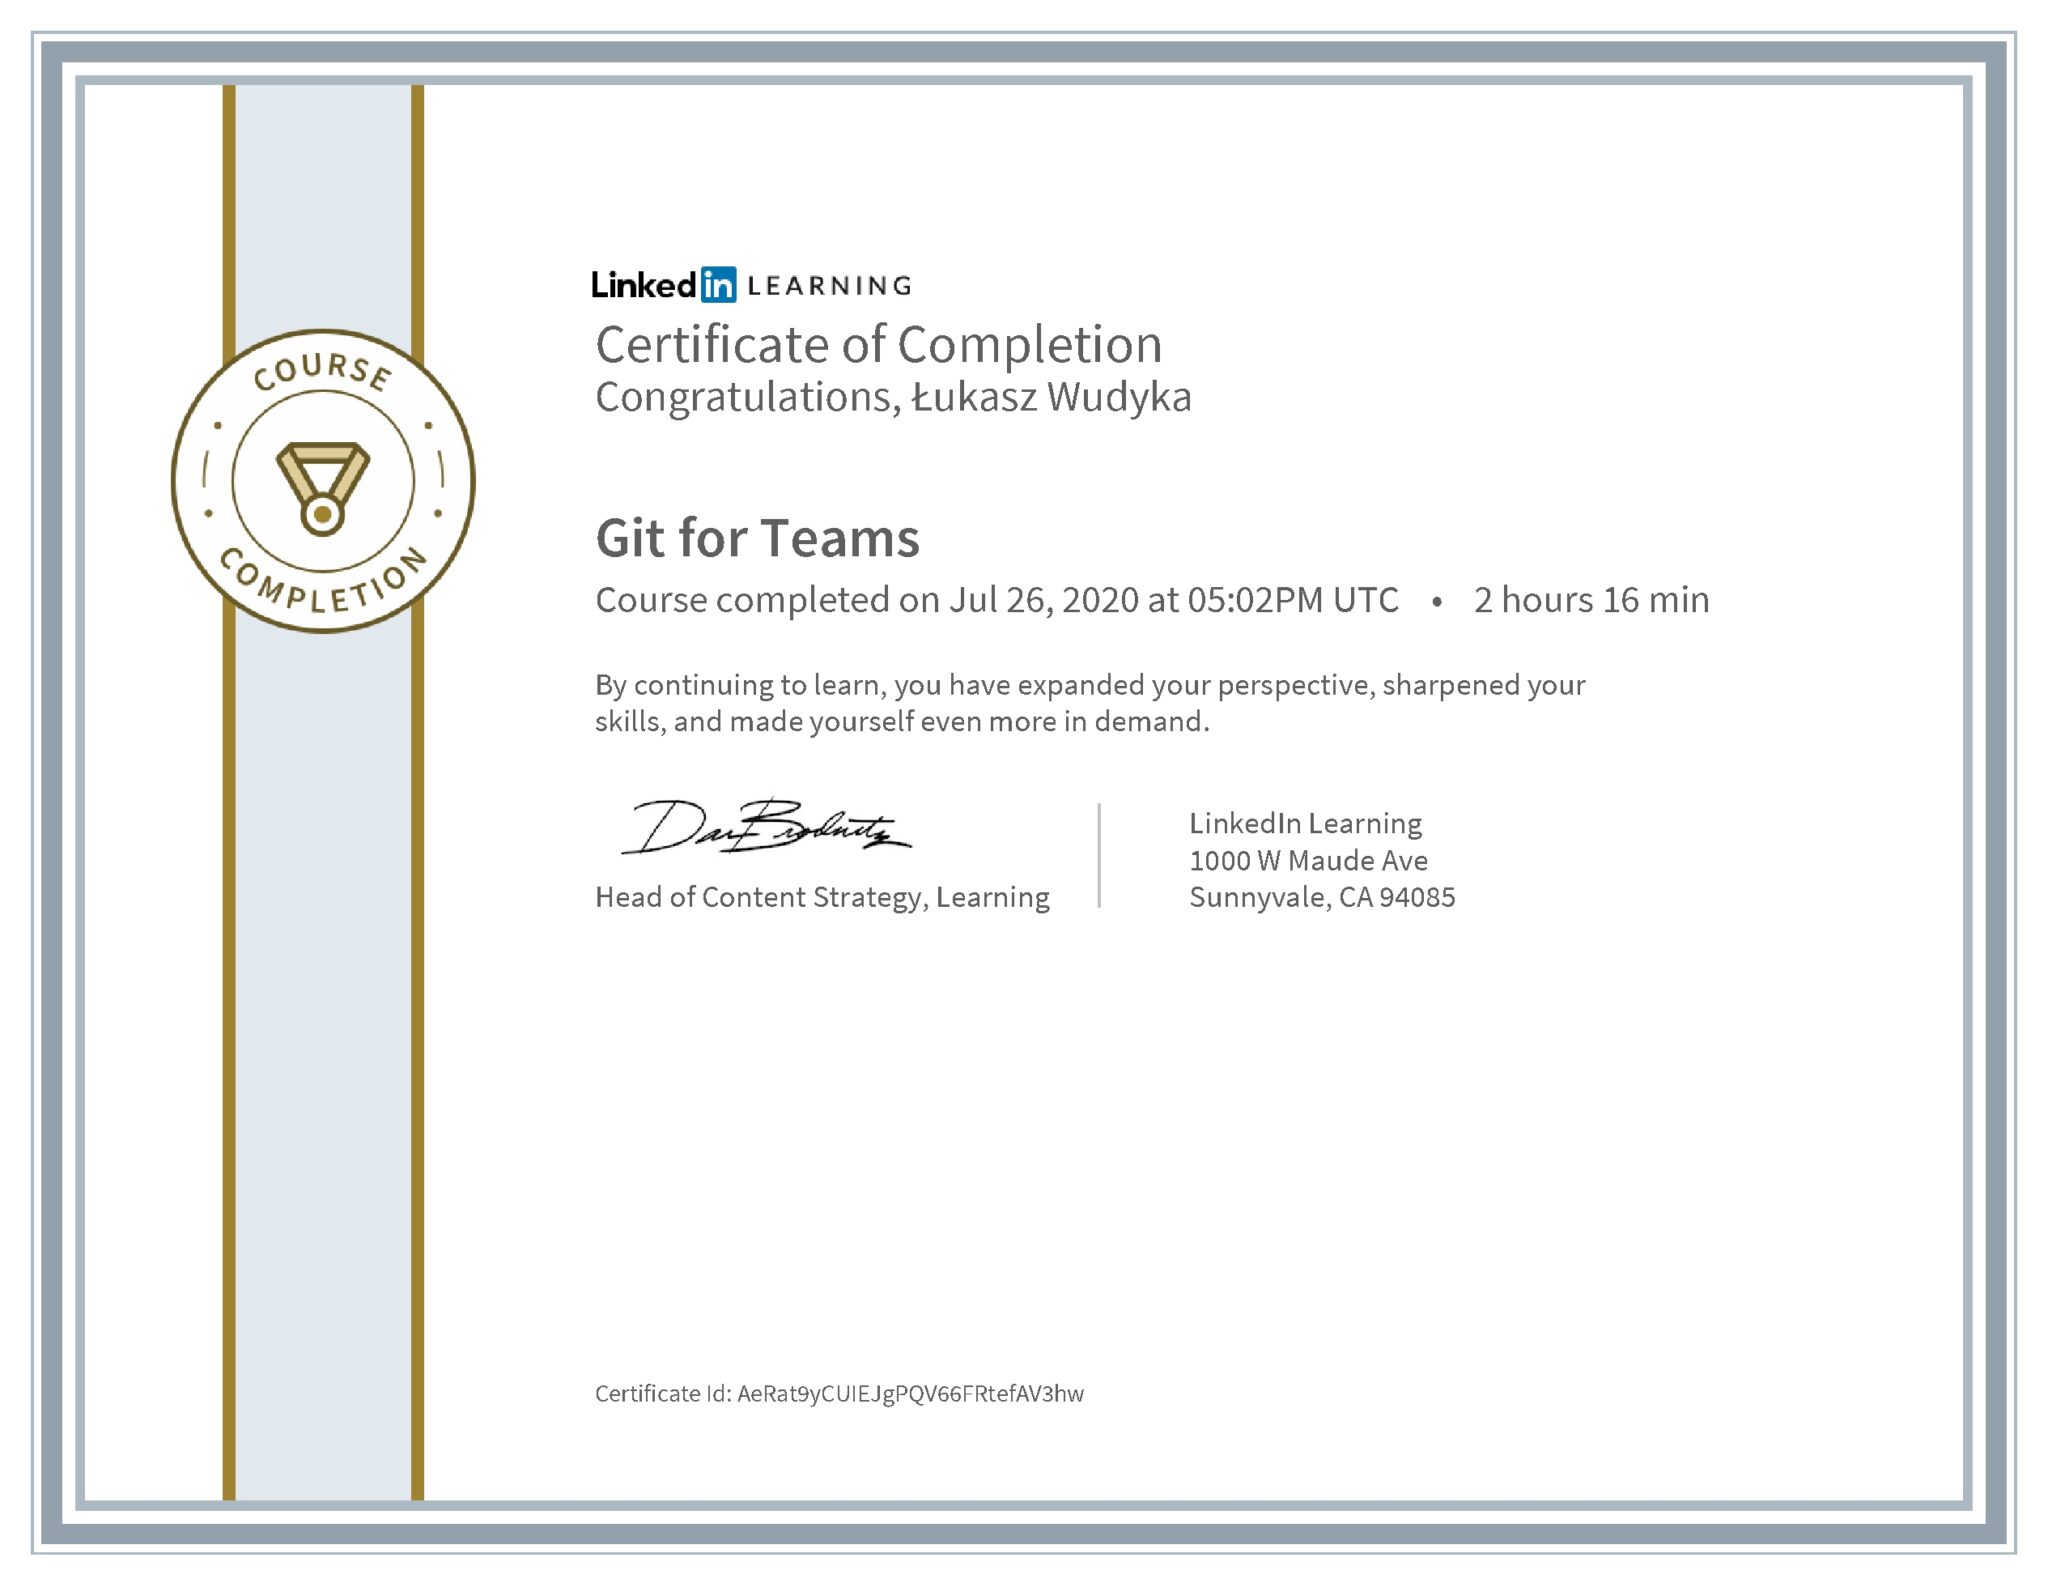 Łukasz Wudyka certyfikat LinkedIn Git for Teams